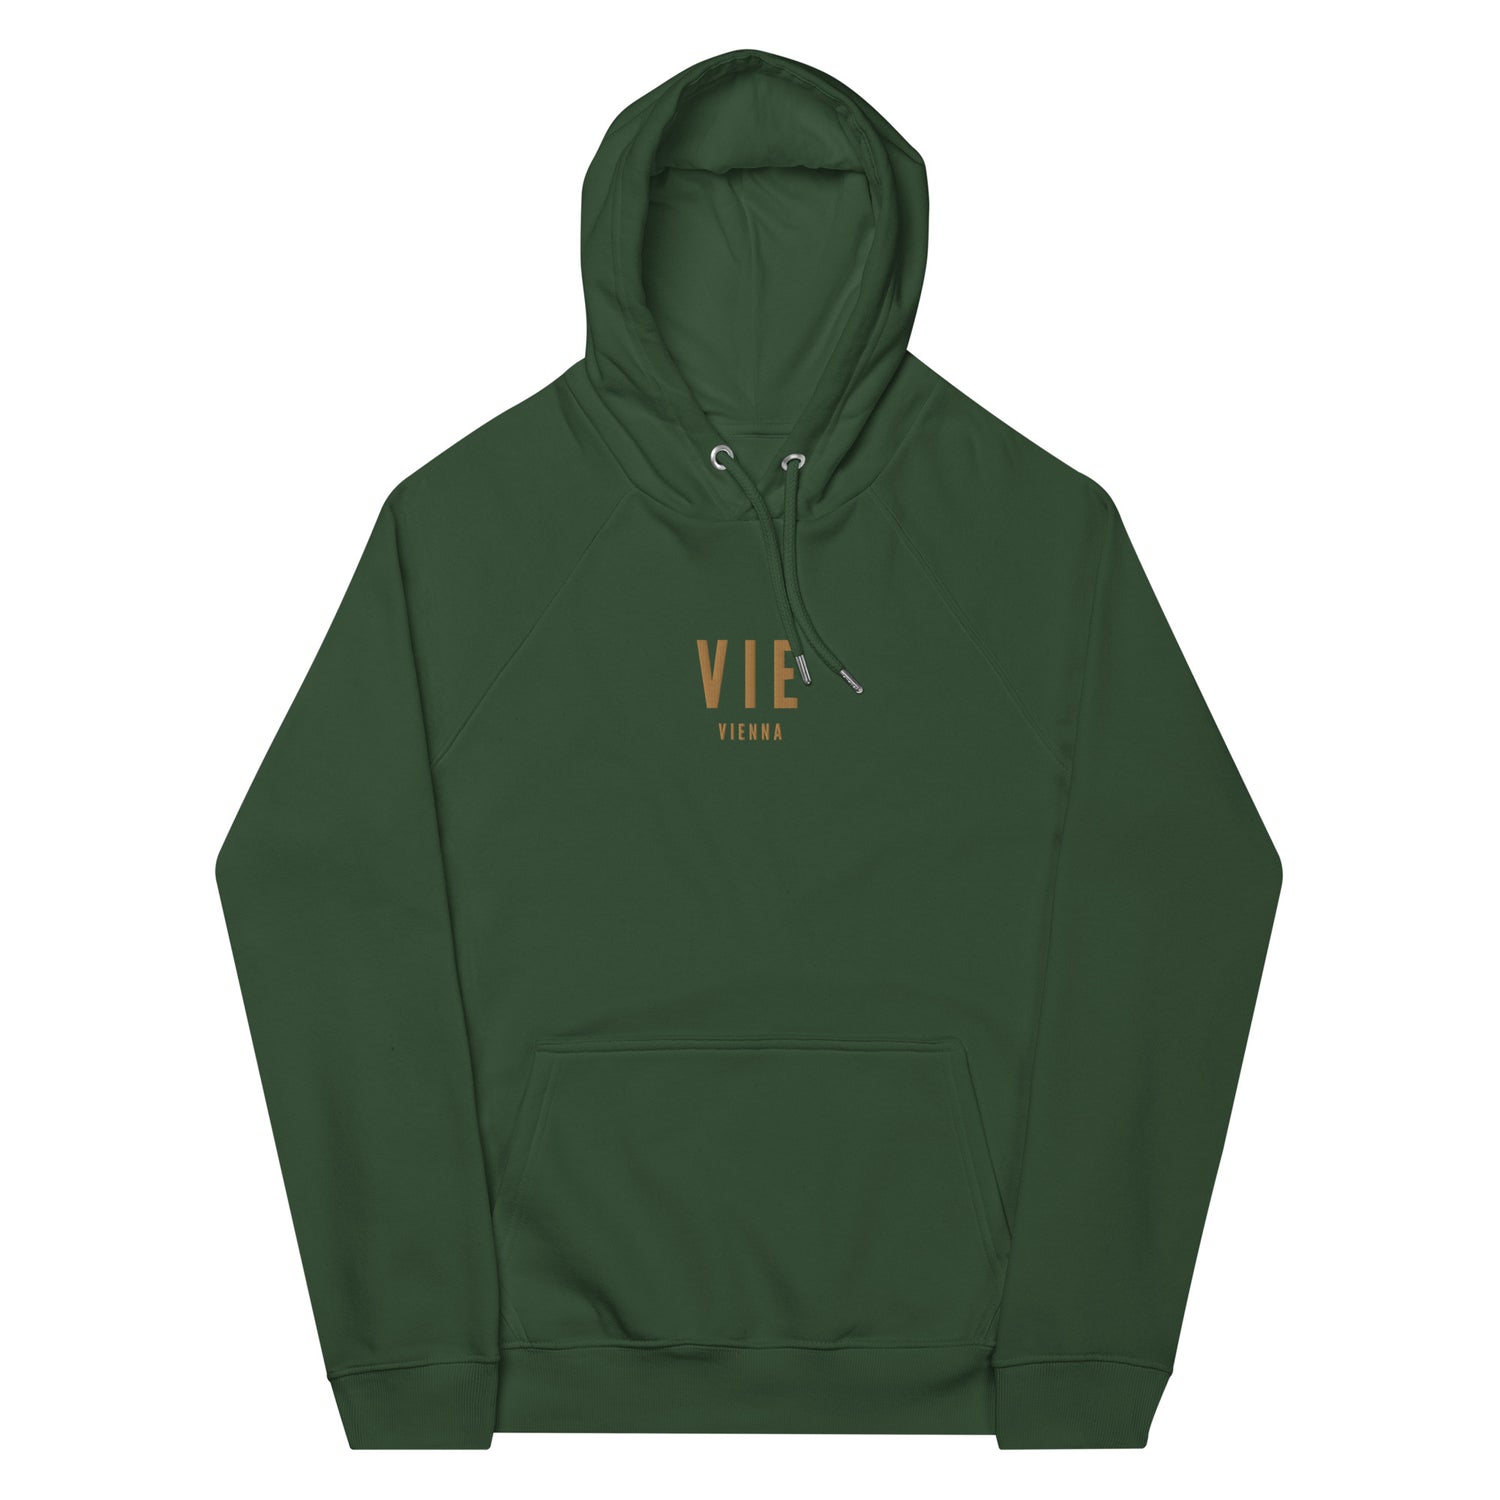 Vienna Austria Hoodies and Sweatshirts • VIE Airport Code